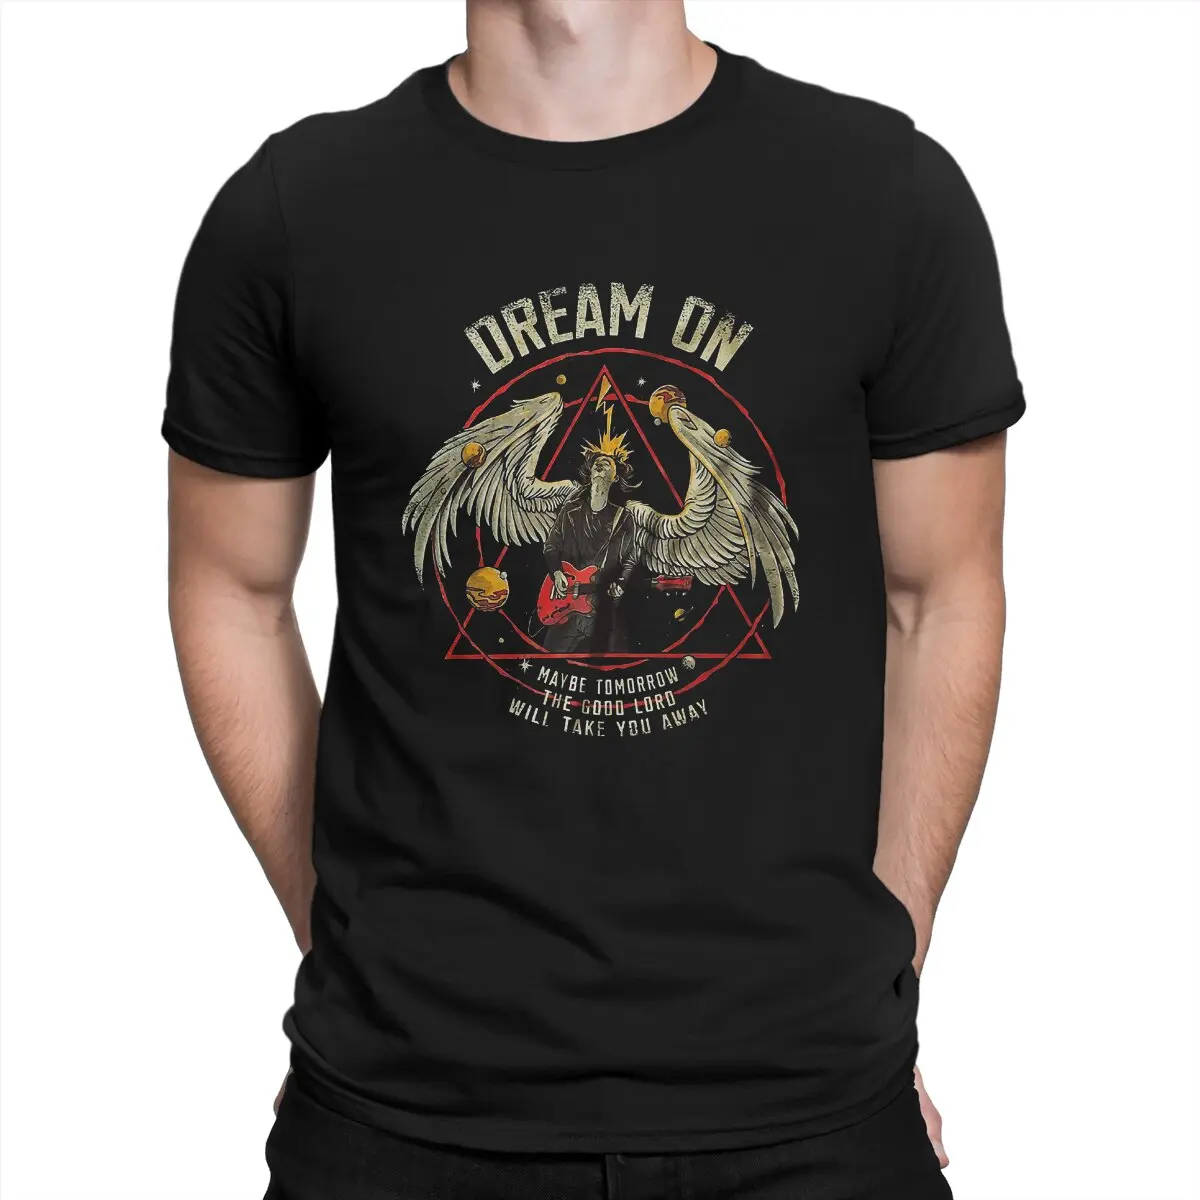 Dream On T-Shirt